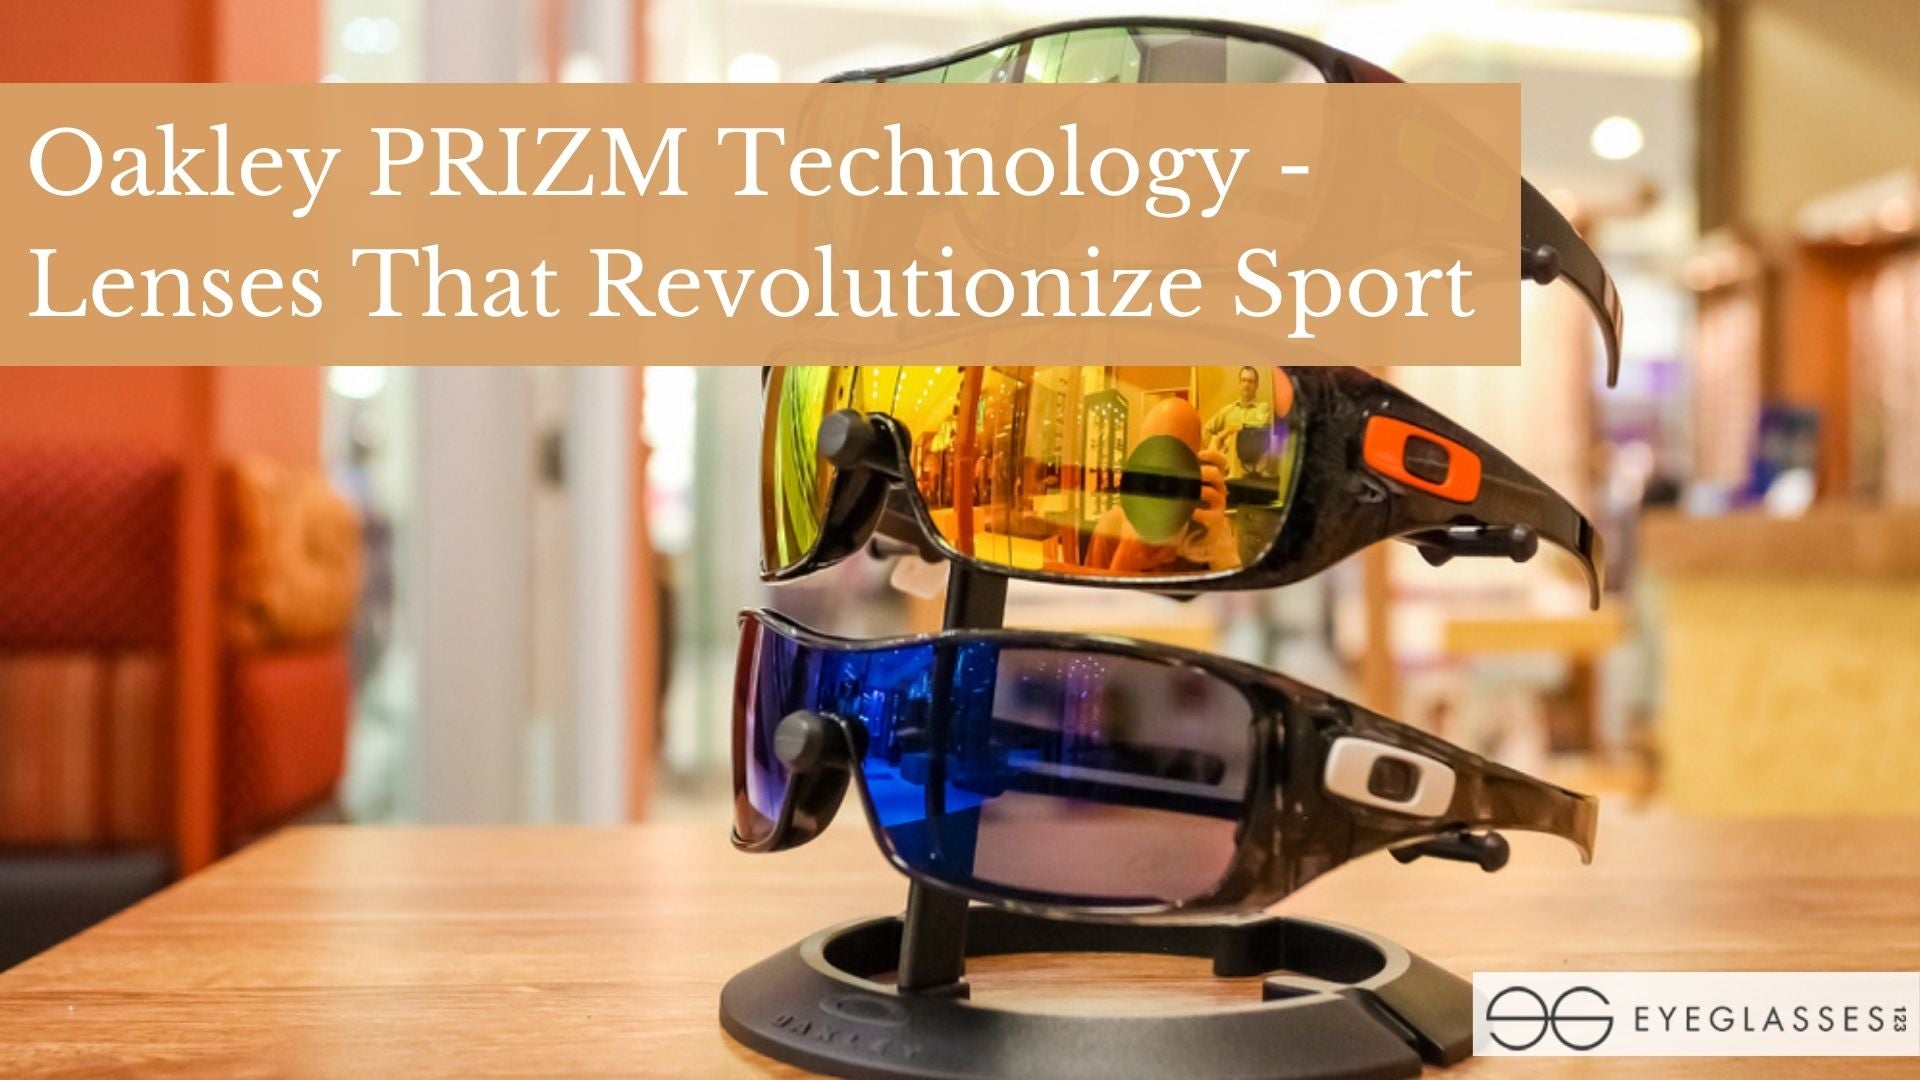 Oakley PRIZM Technology - Lenses That Revolutionize Sport